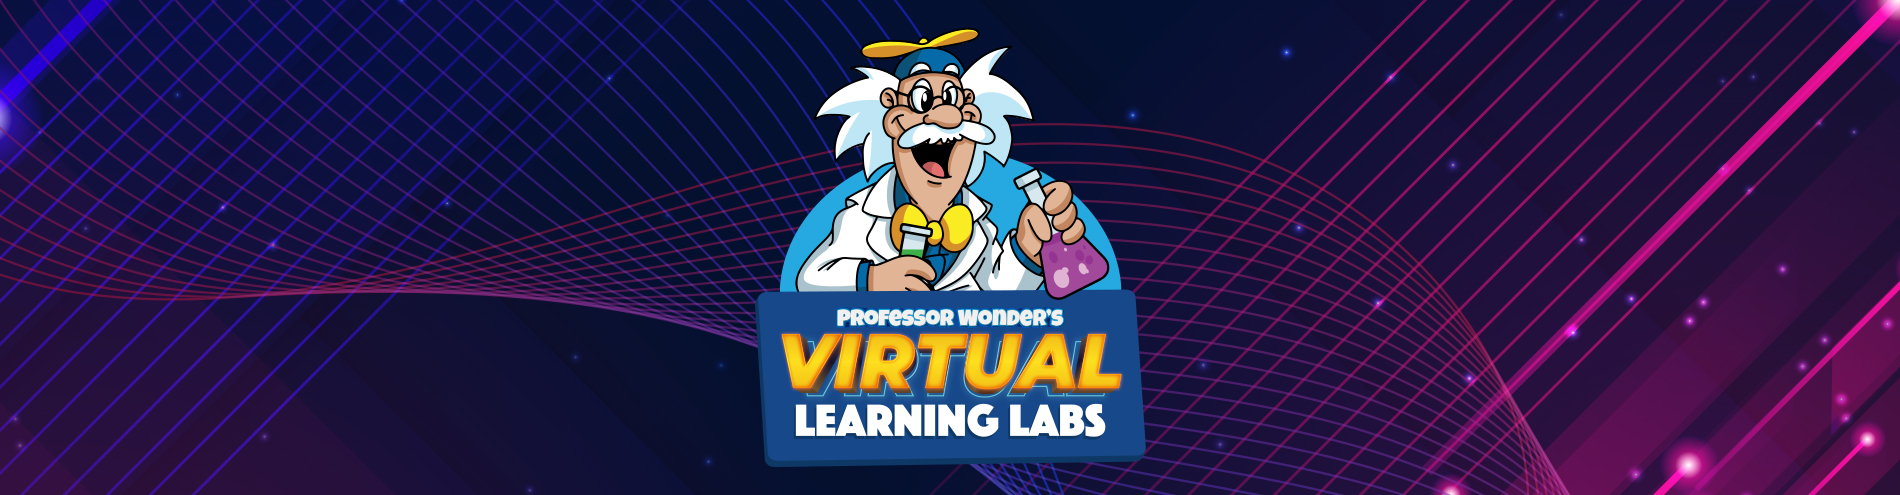 Virtual Learning Labs Header